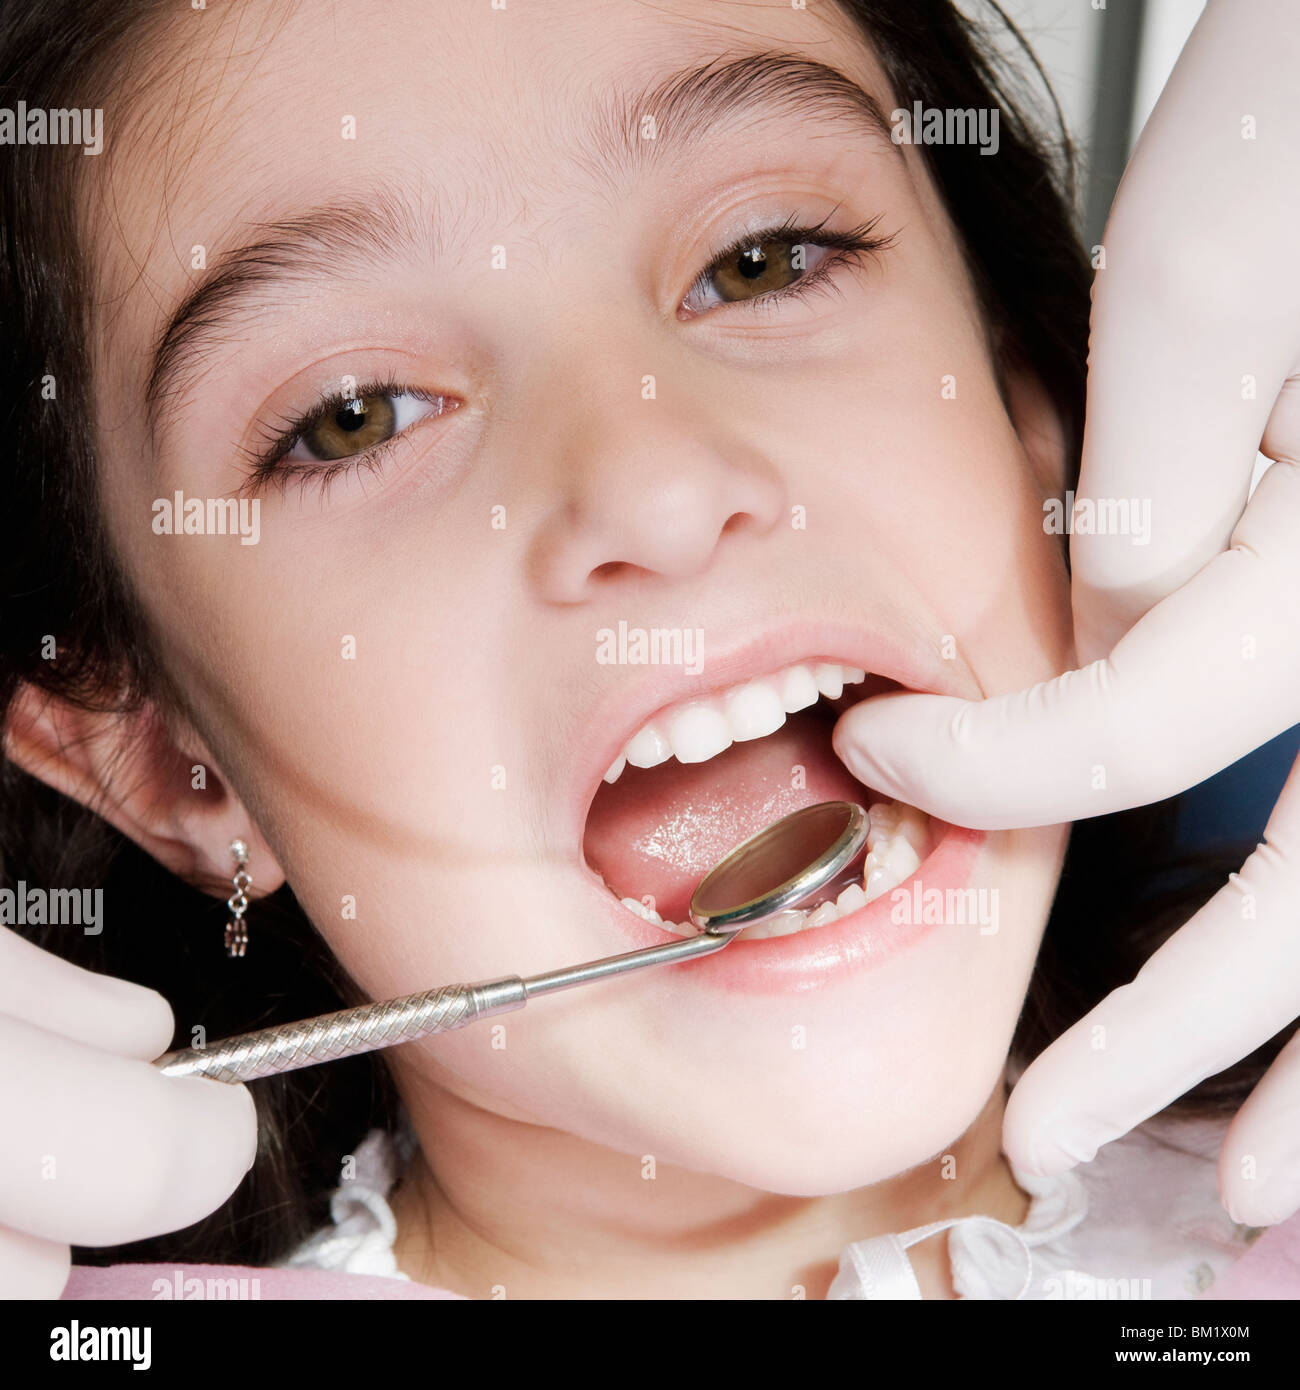 Dentist checking girl's teeth Stock Photo